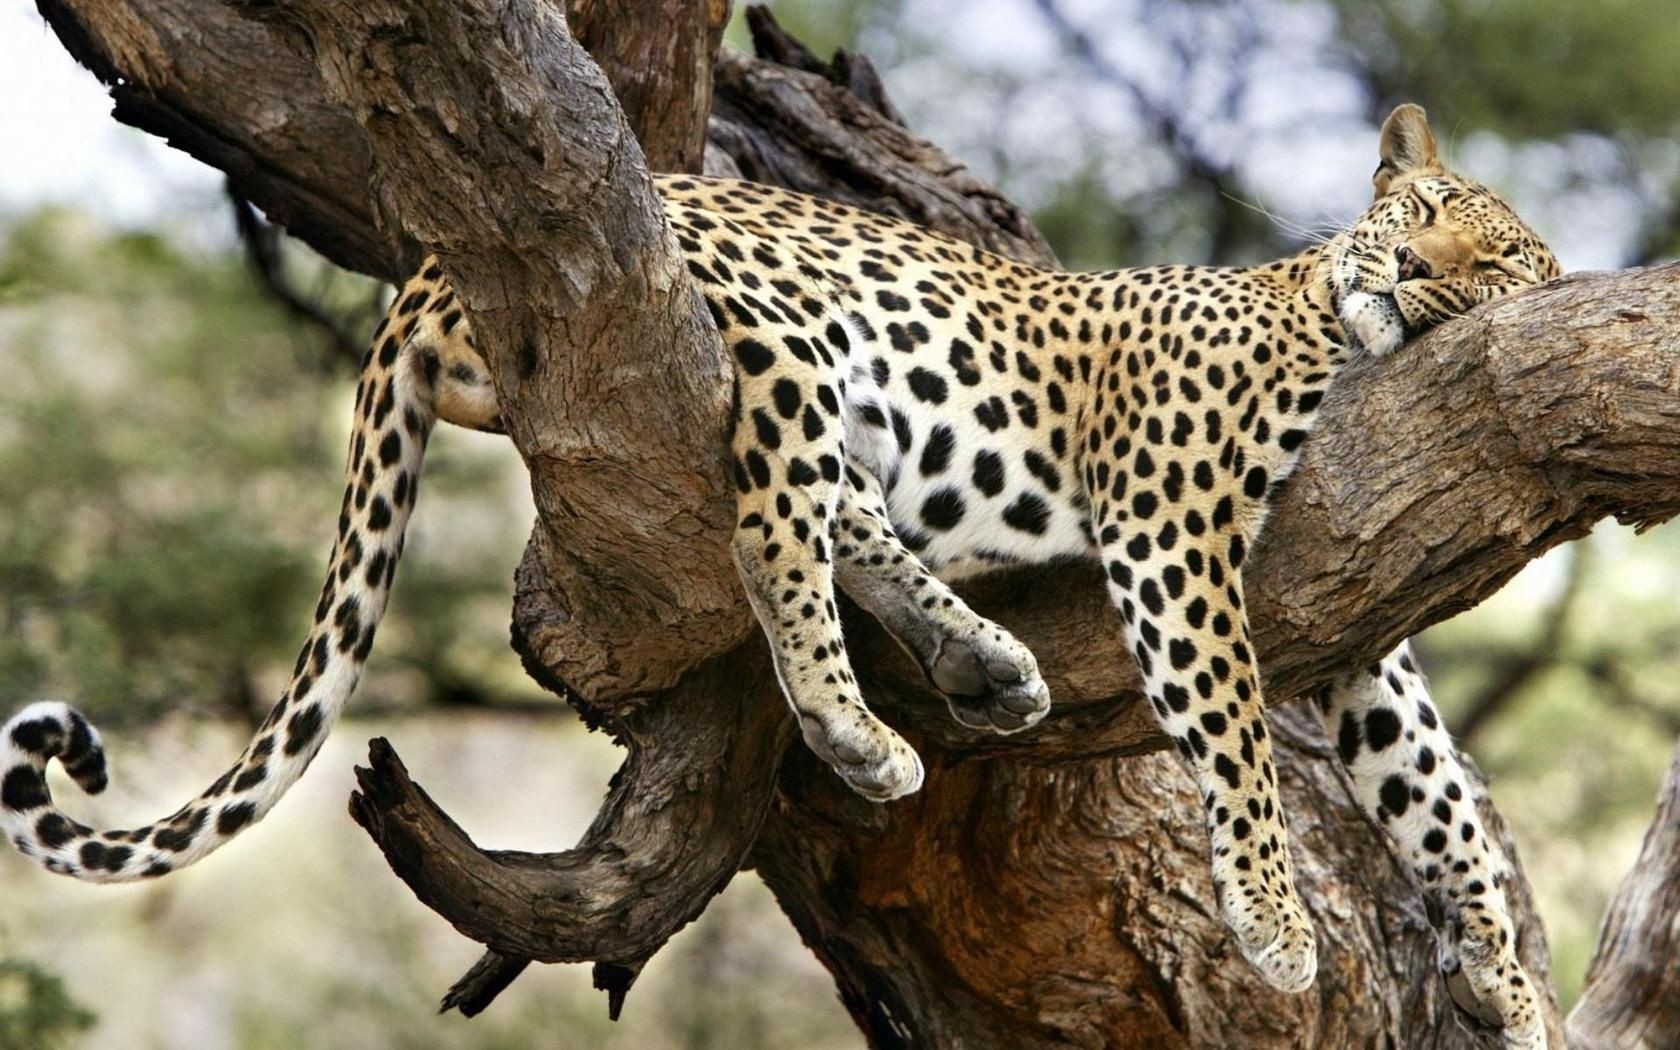 leopards wildlife mammal nature wild animal safari cat predator zoo outdoors